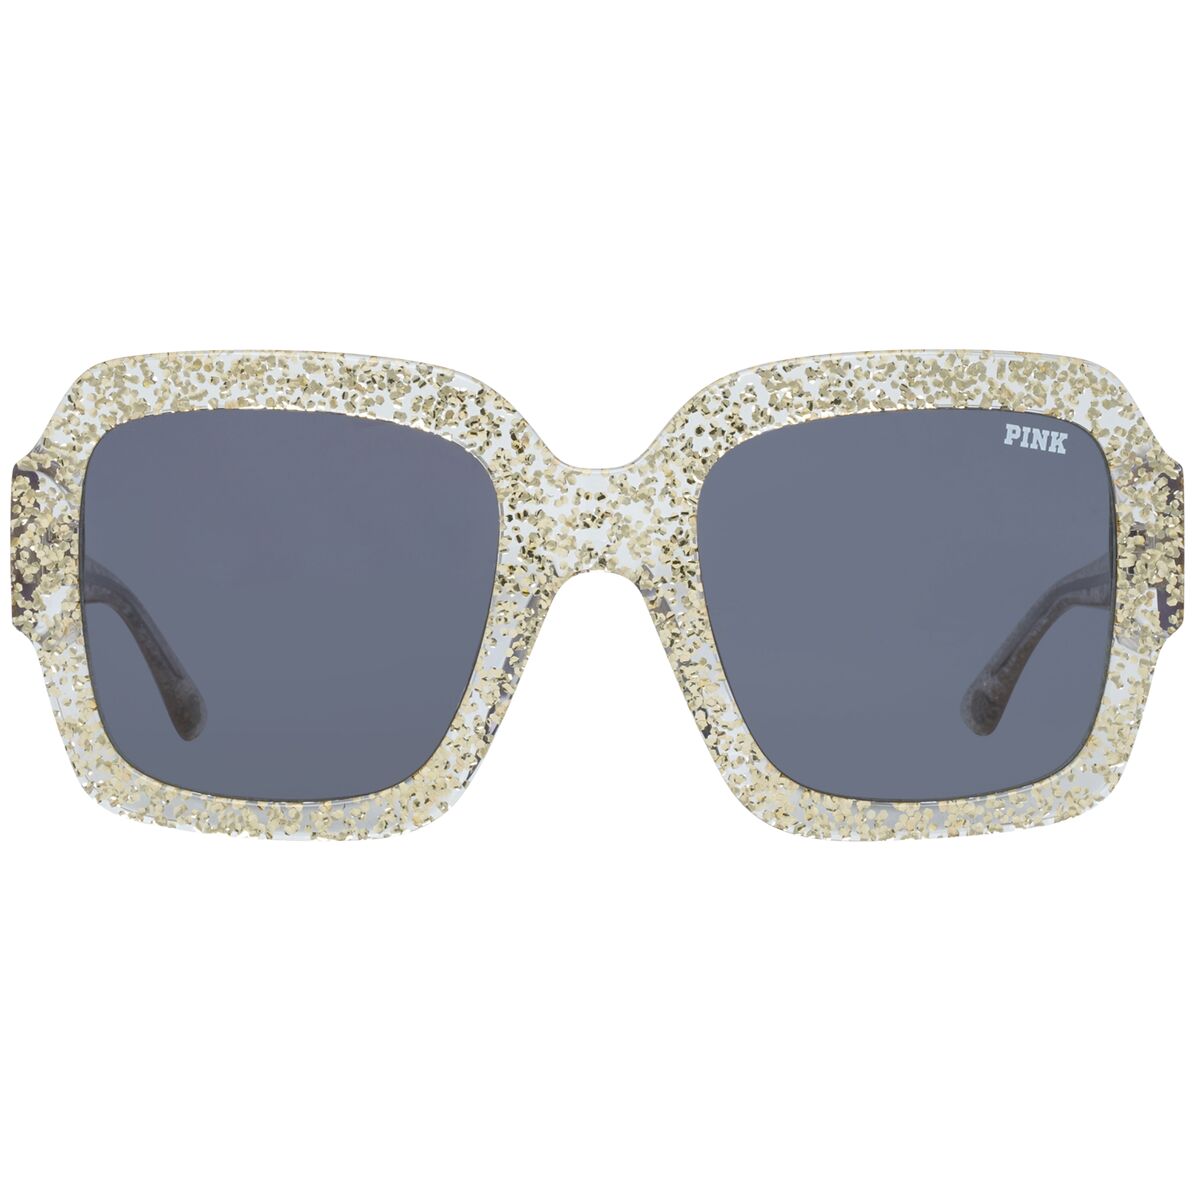 Kaufe Damensonnenbrille Victoria's Secret bei AWK Flagship um € 59.00